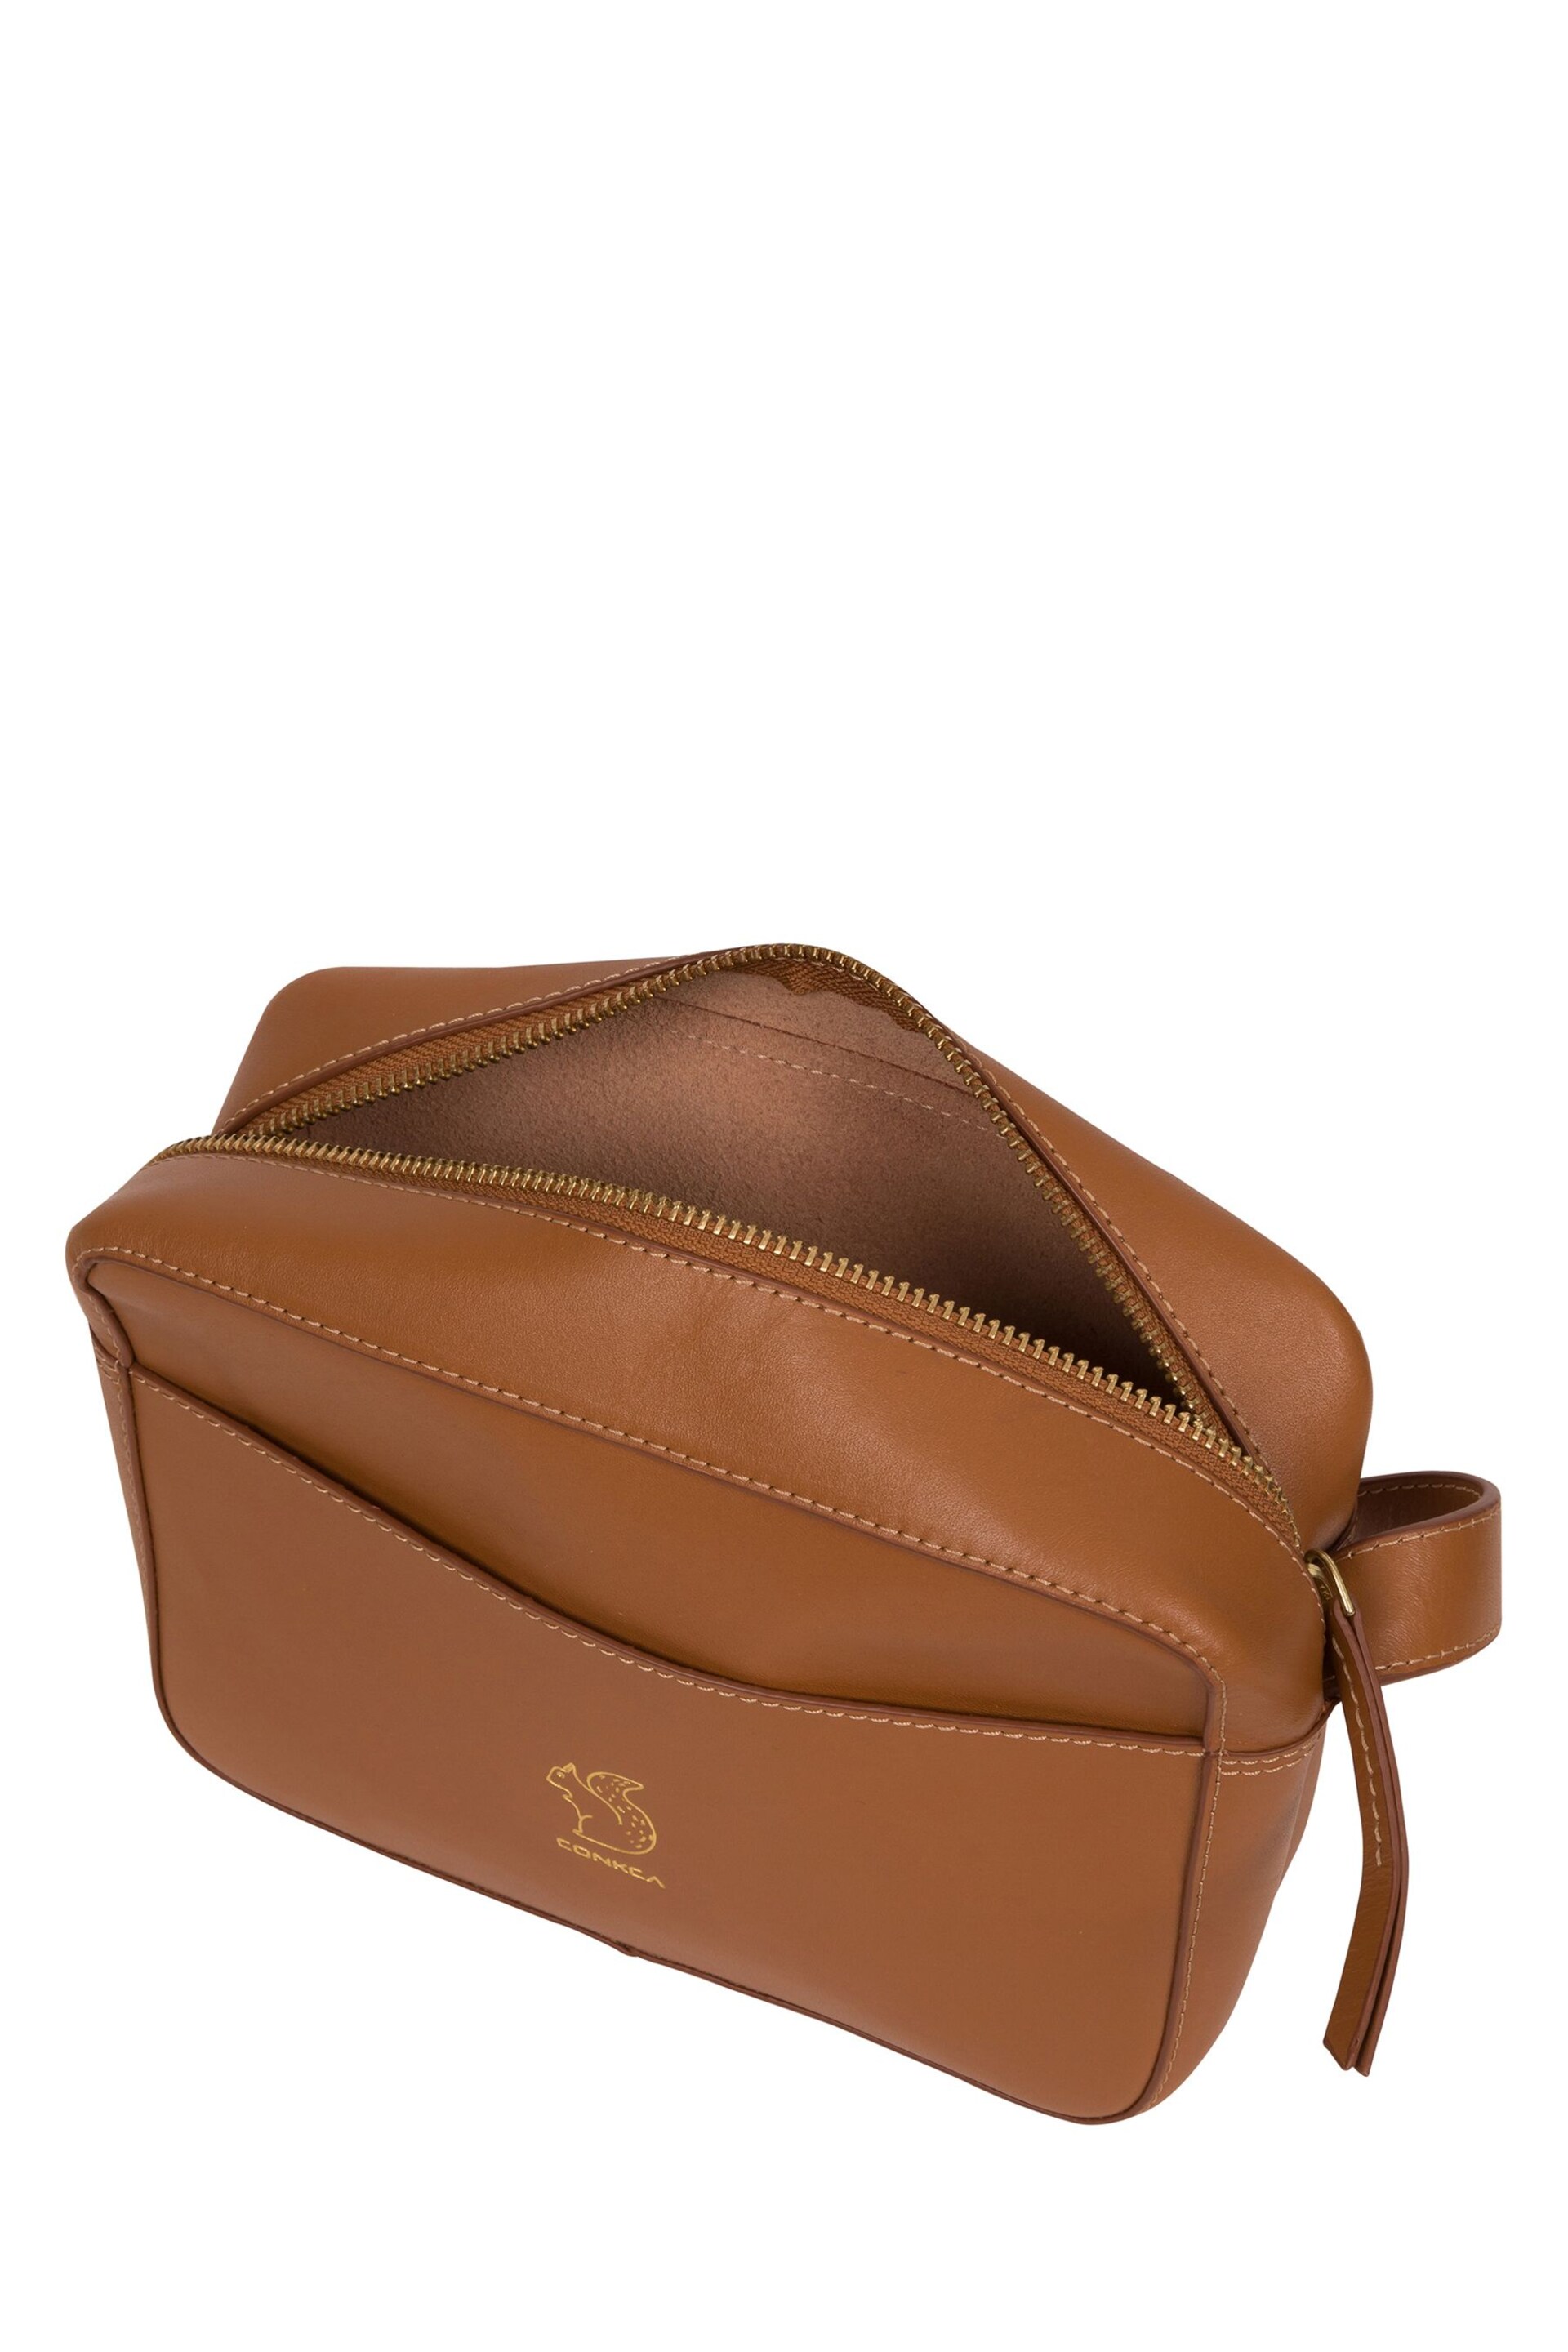 Conkca Tatum Vegetable-Tanned Leather Cross-Body Bag - Image 4 of 5